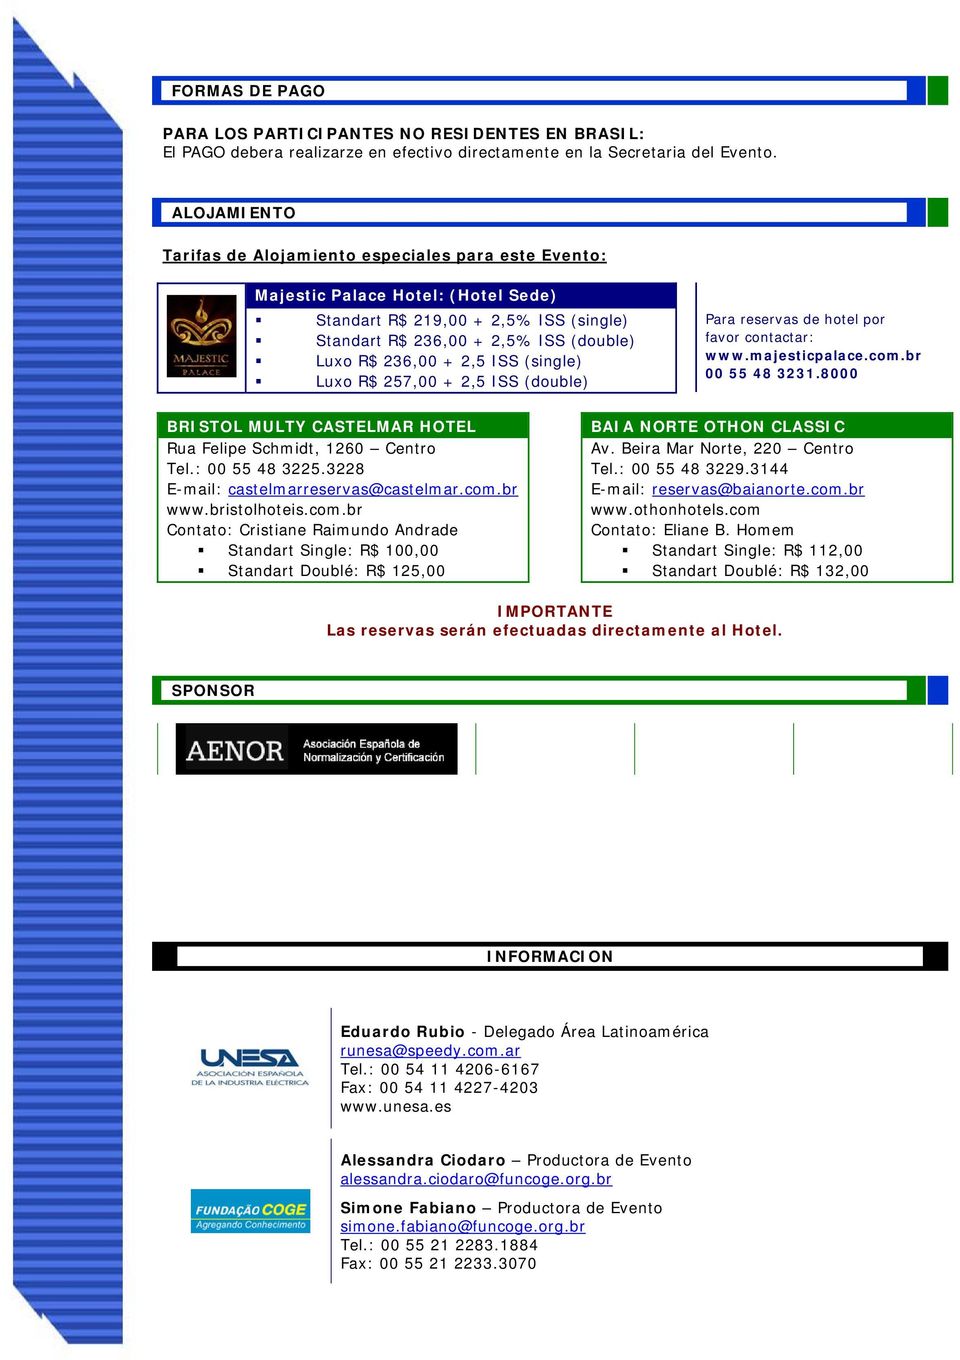 ISS (single) Luxo R$ 257,00 + 2,5 ISS (double) Para reservas de hotel por favor contactar: www.majesticpalace.com.br 00 55 48 3231.